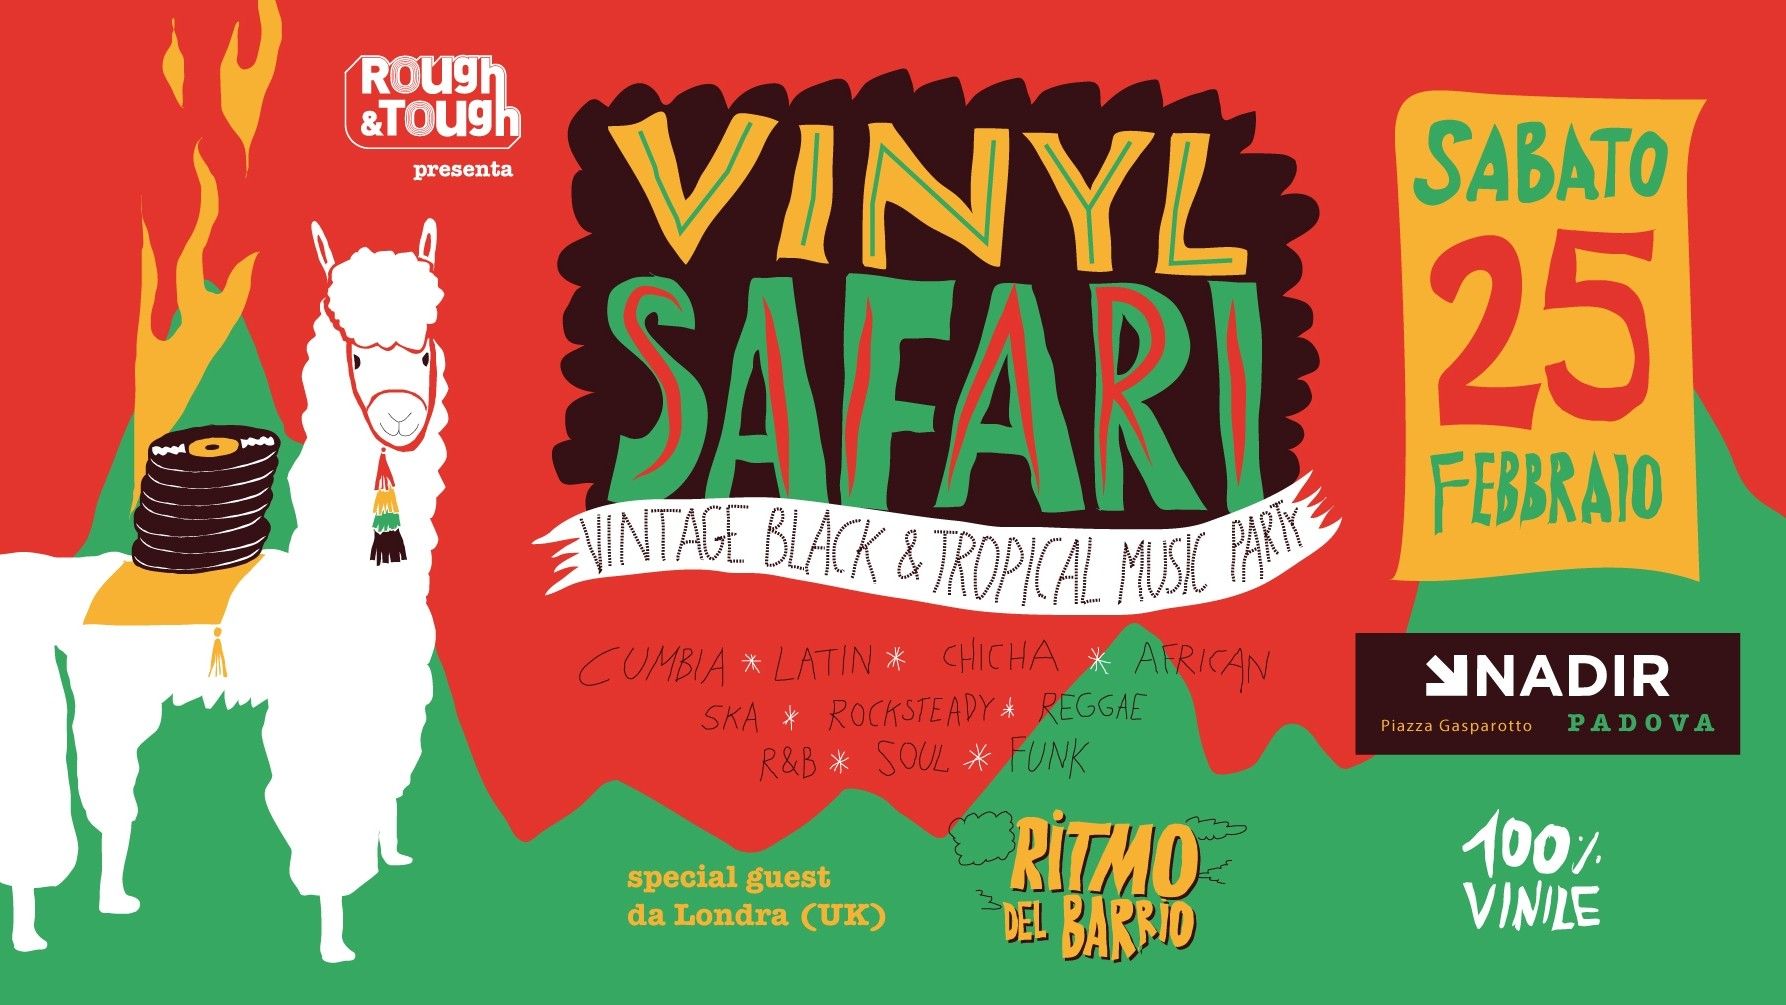 Vinyl Safari w/ guest: Ritmo del Barrio (London, UK)